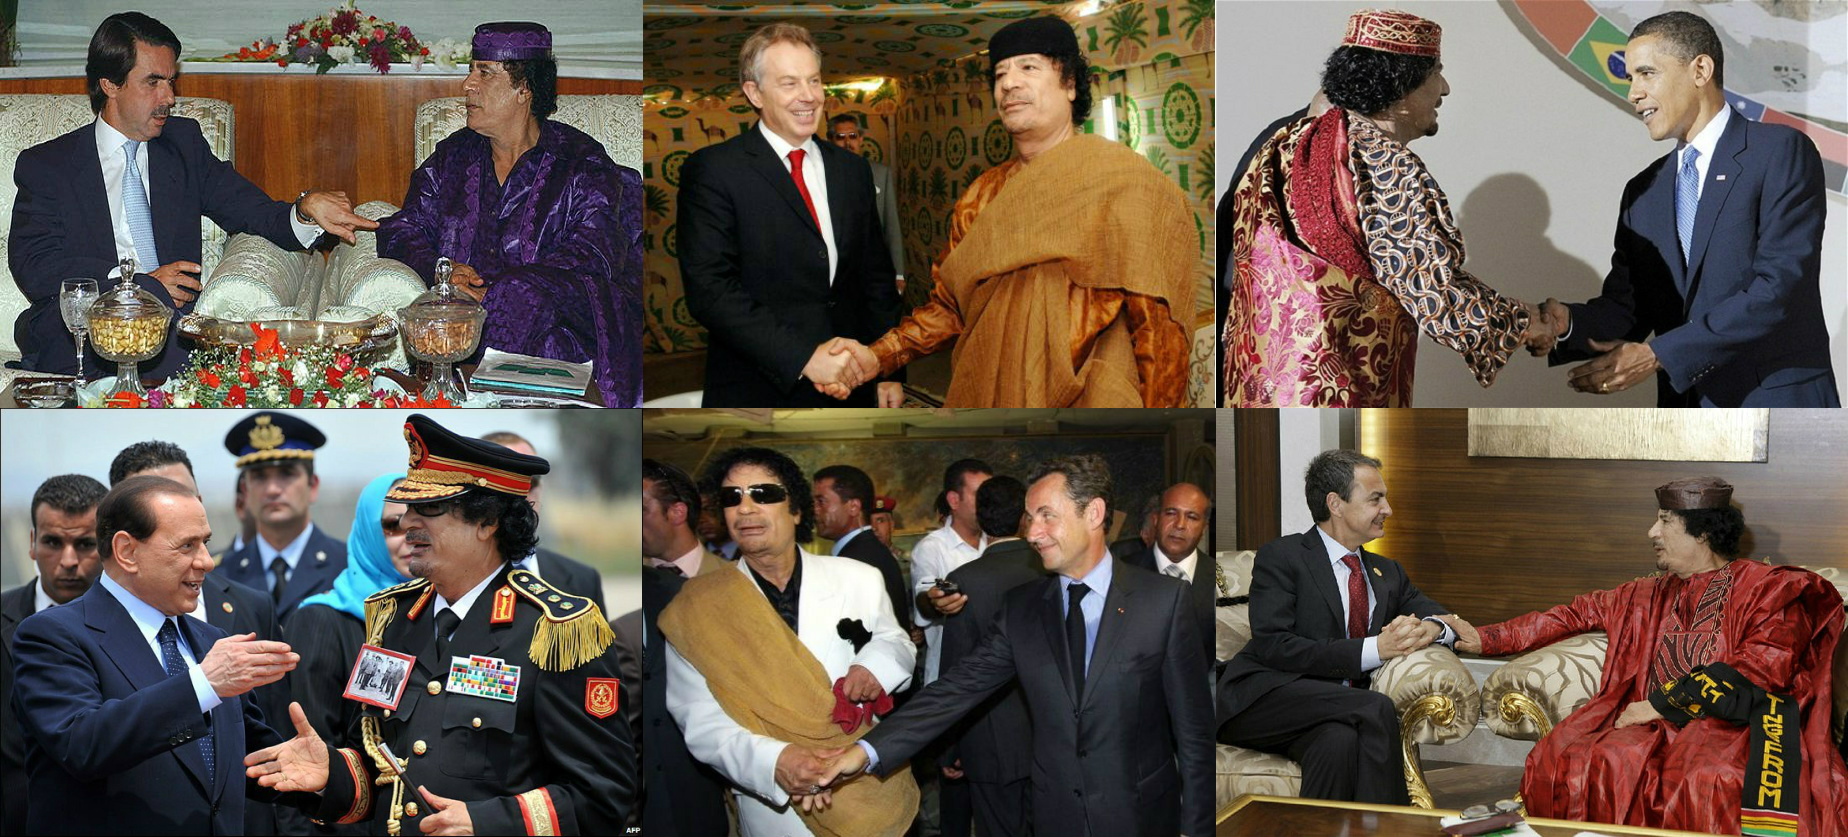 Lideres árabes que se enfrentaron al fundamentalismo islámico (y II): Gaddafi, Saddam Hussein, Al Assad Gaddaficonloslideresoccidentales